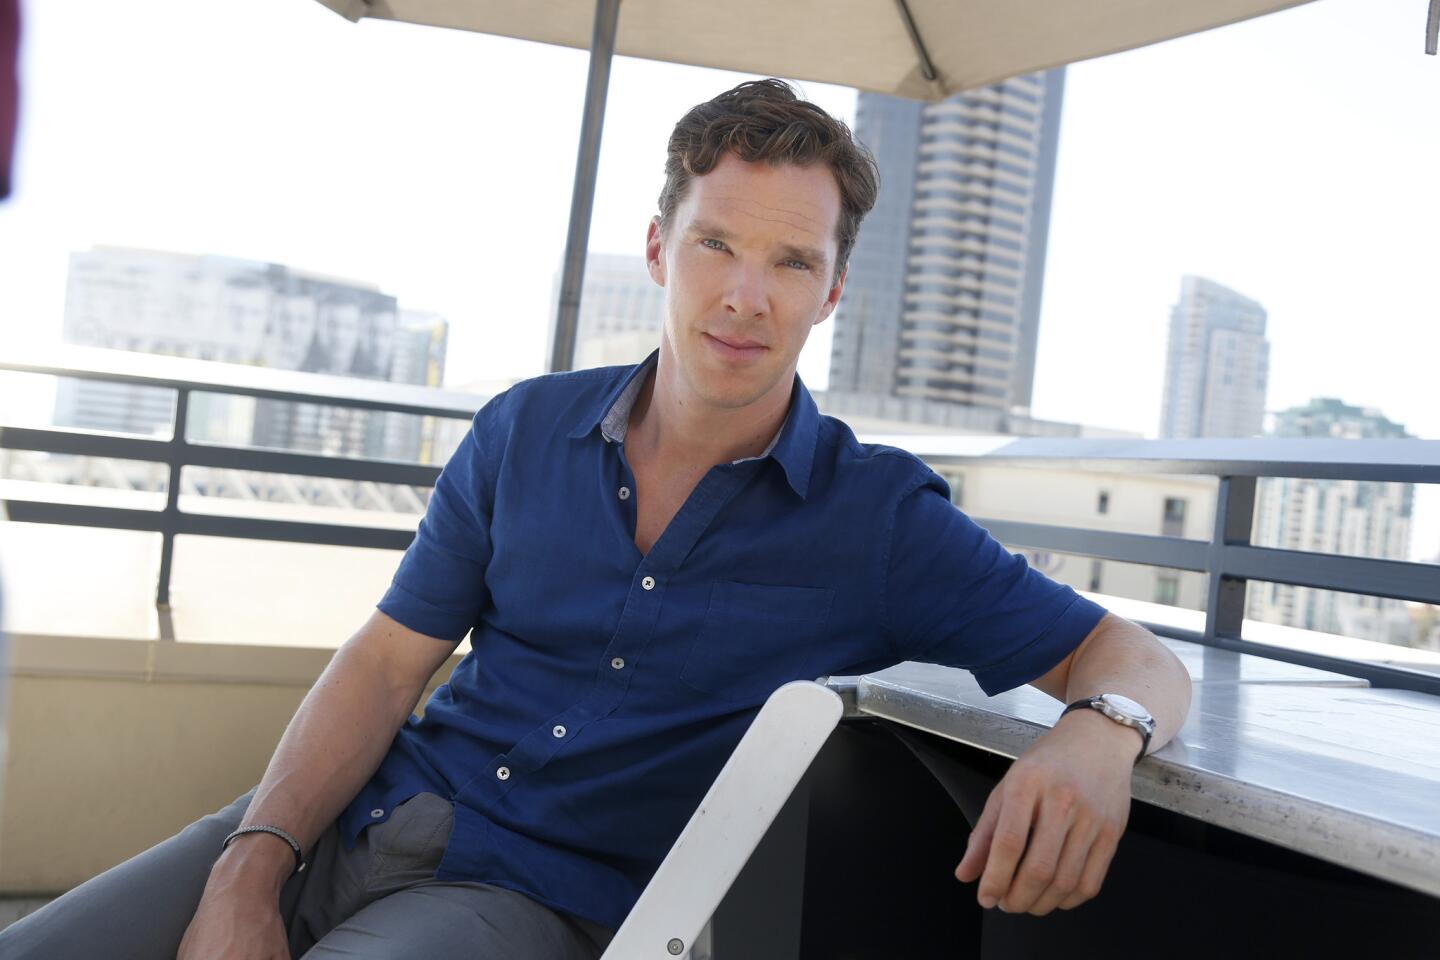 Benedict Cumberbatch | Oscars 2015 presenter